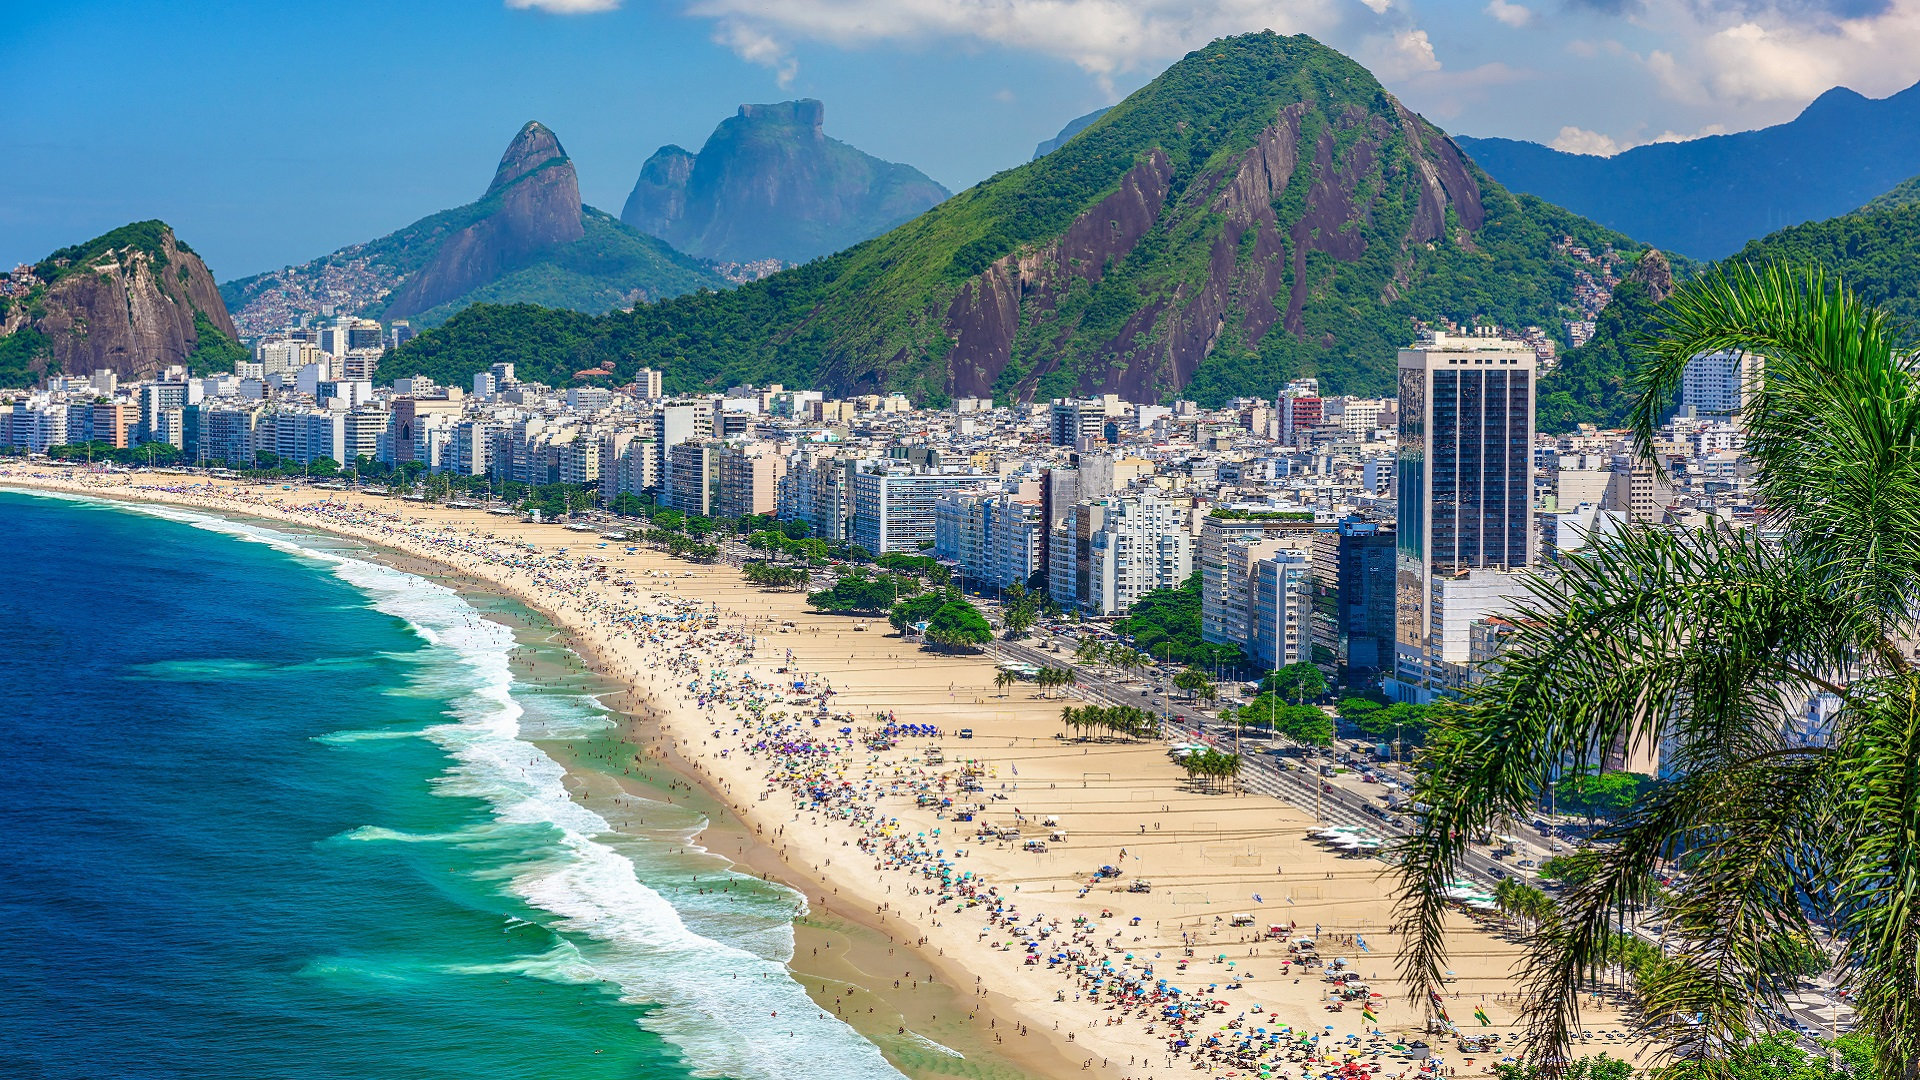  Brazylia Dovolen 2020 Sv tky Z jezdy All Inclusive Last Minute 